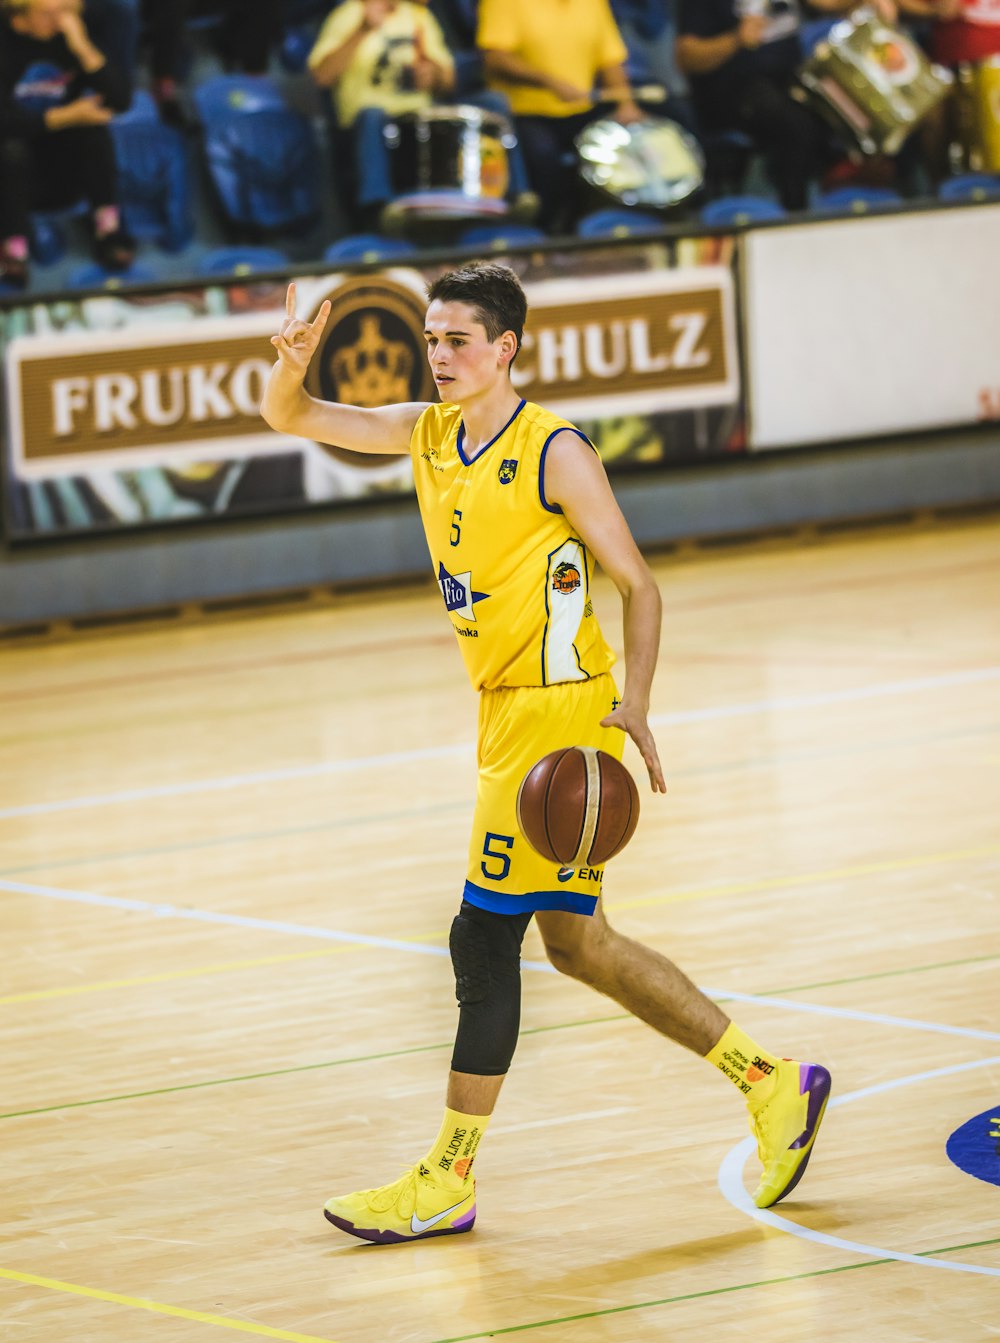 Man in yellow jersey shirt playing basketball photo – Free Česká republika  Image on Unsplash